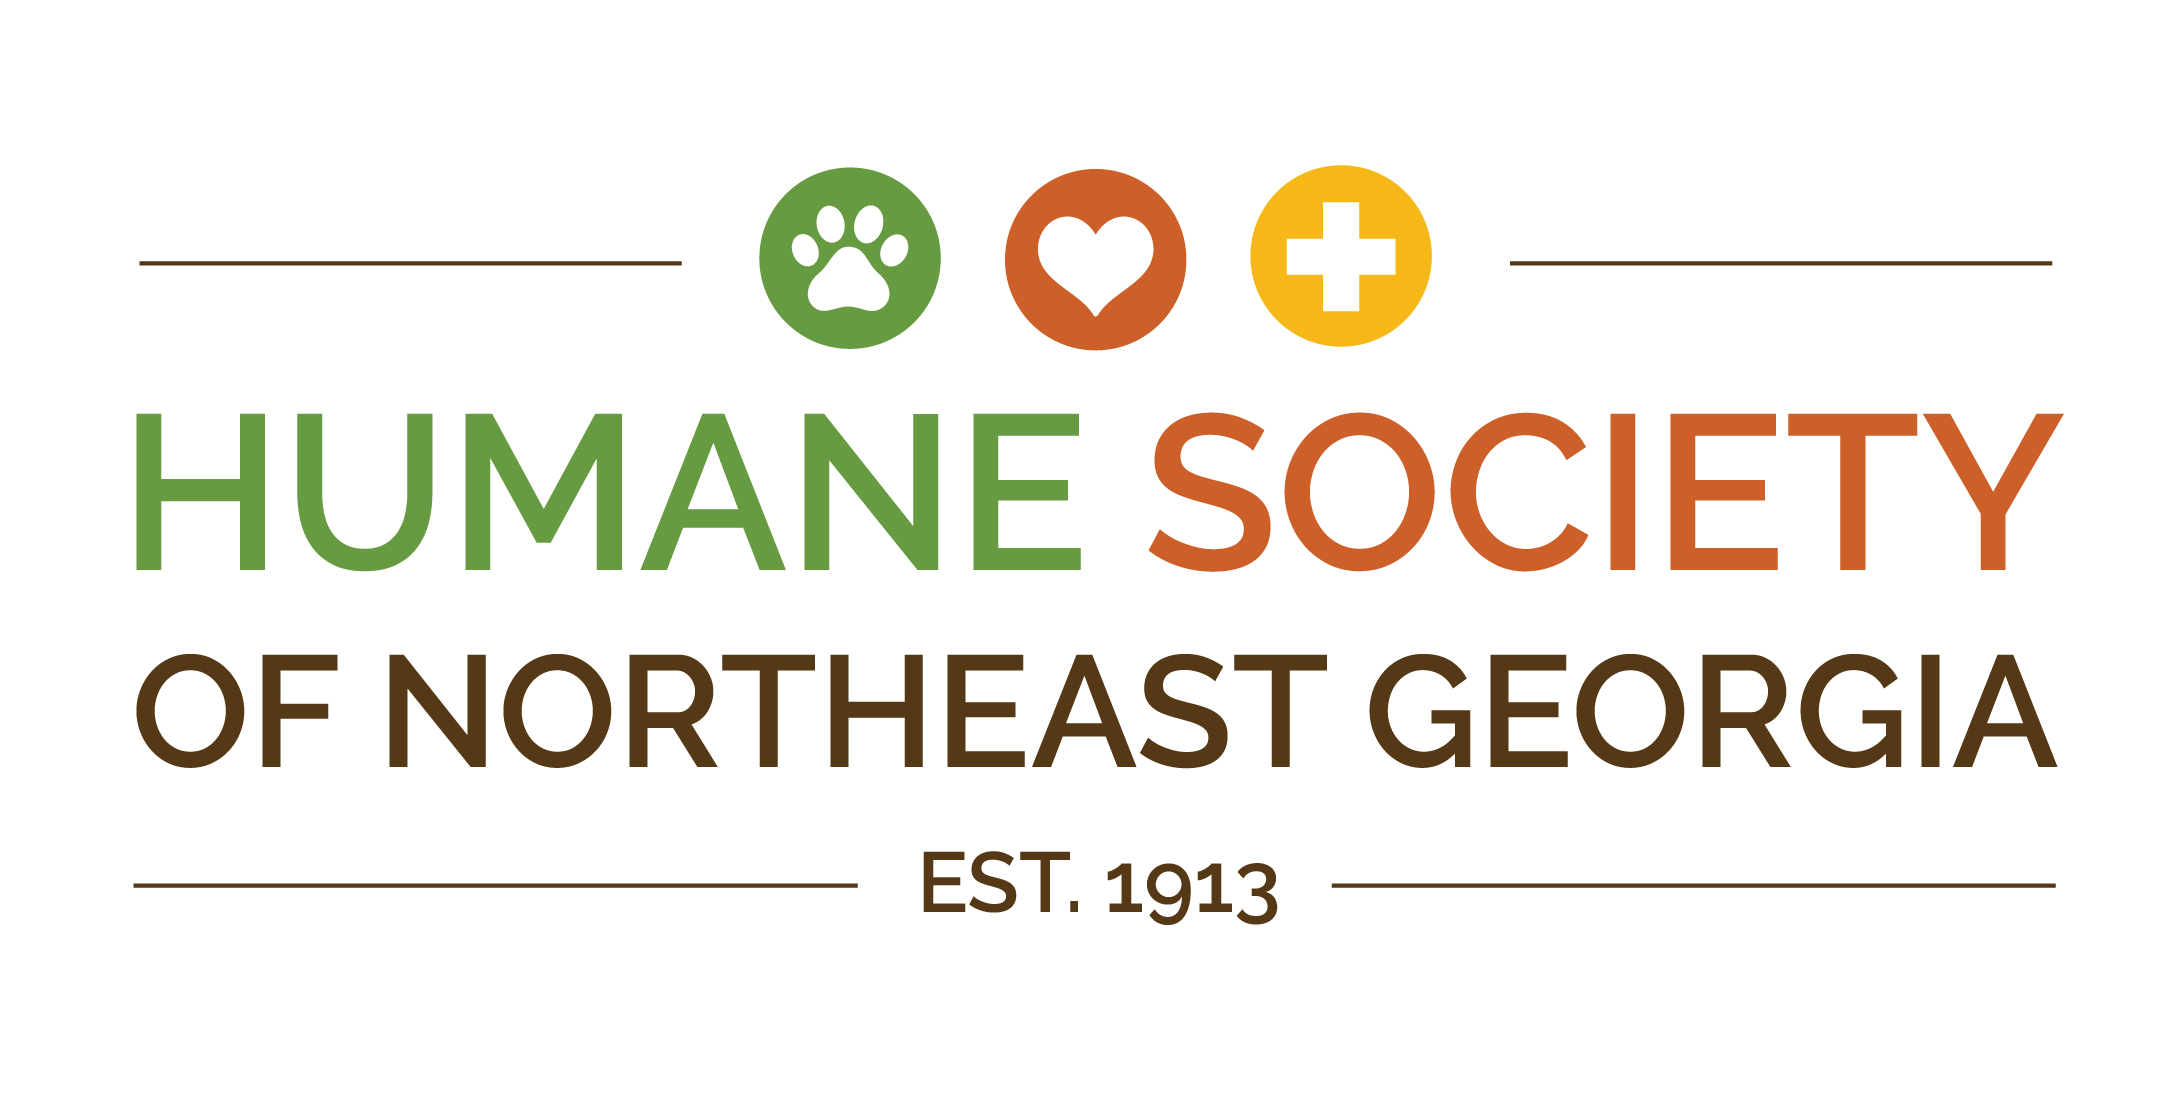 Northeast Georgia Humane Society Logo